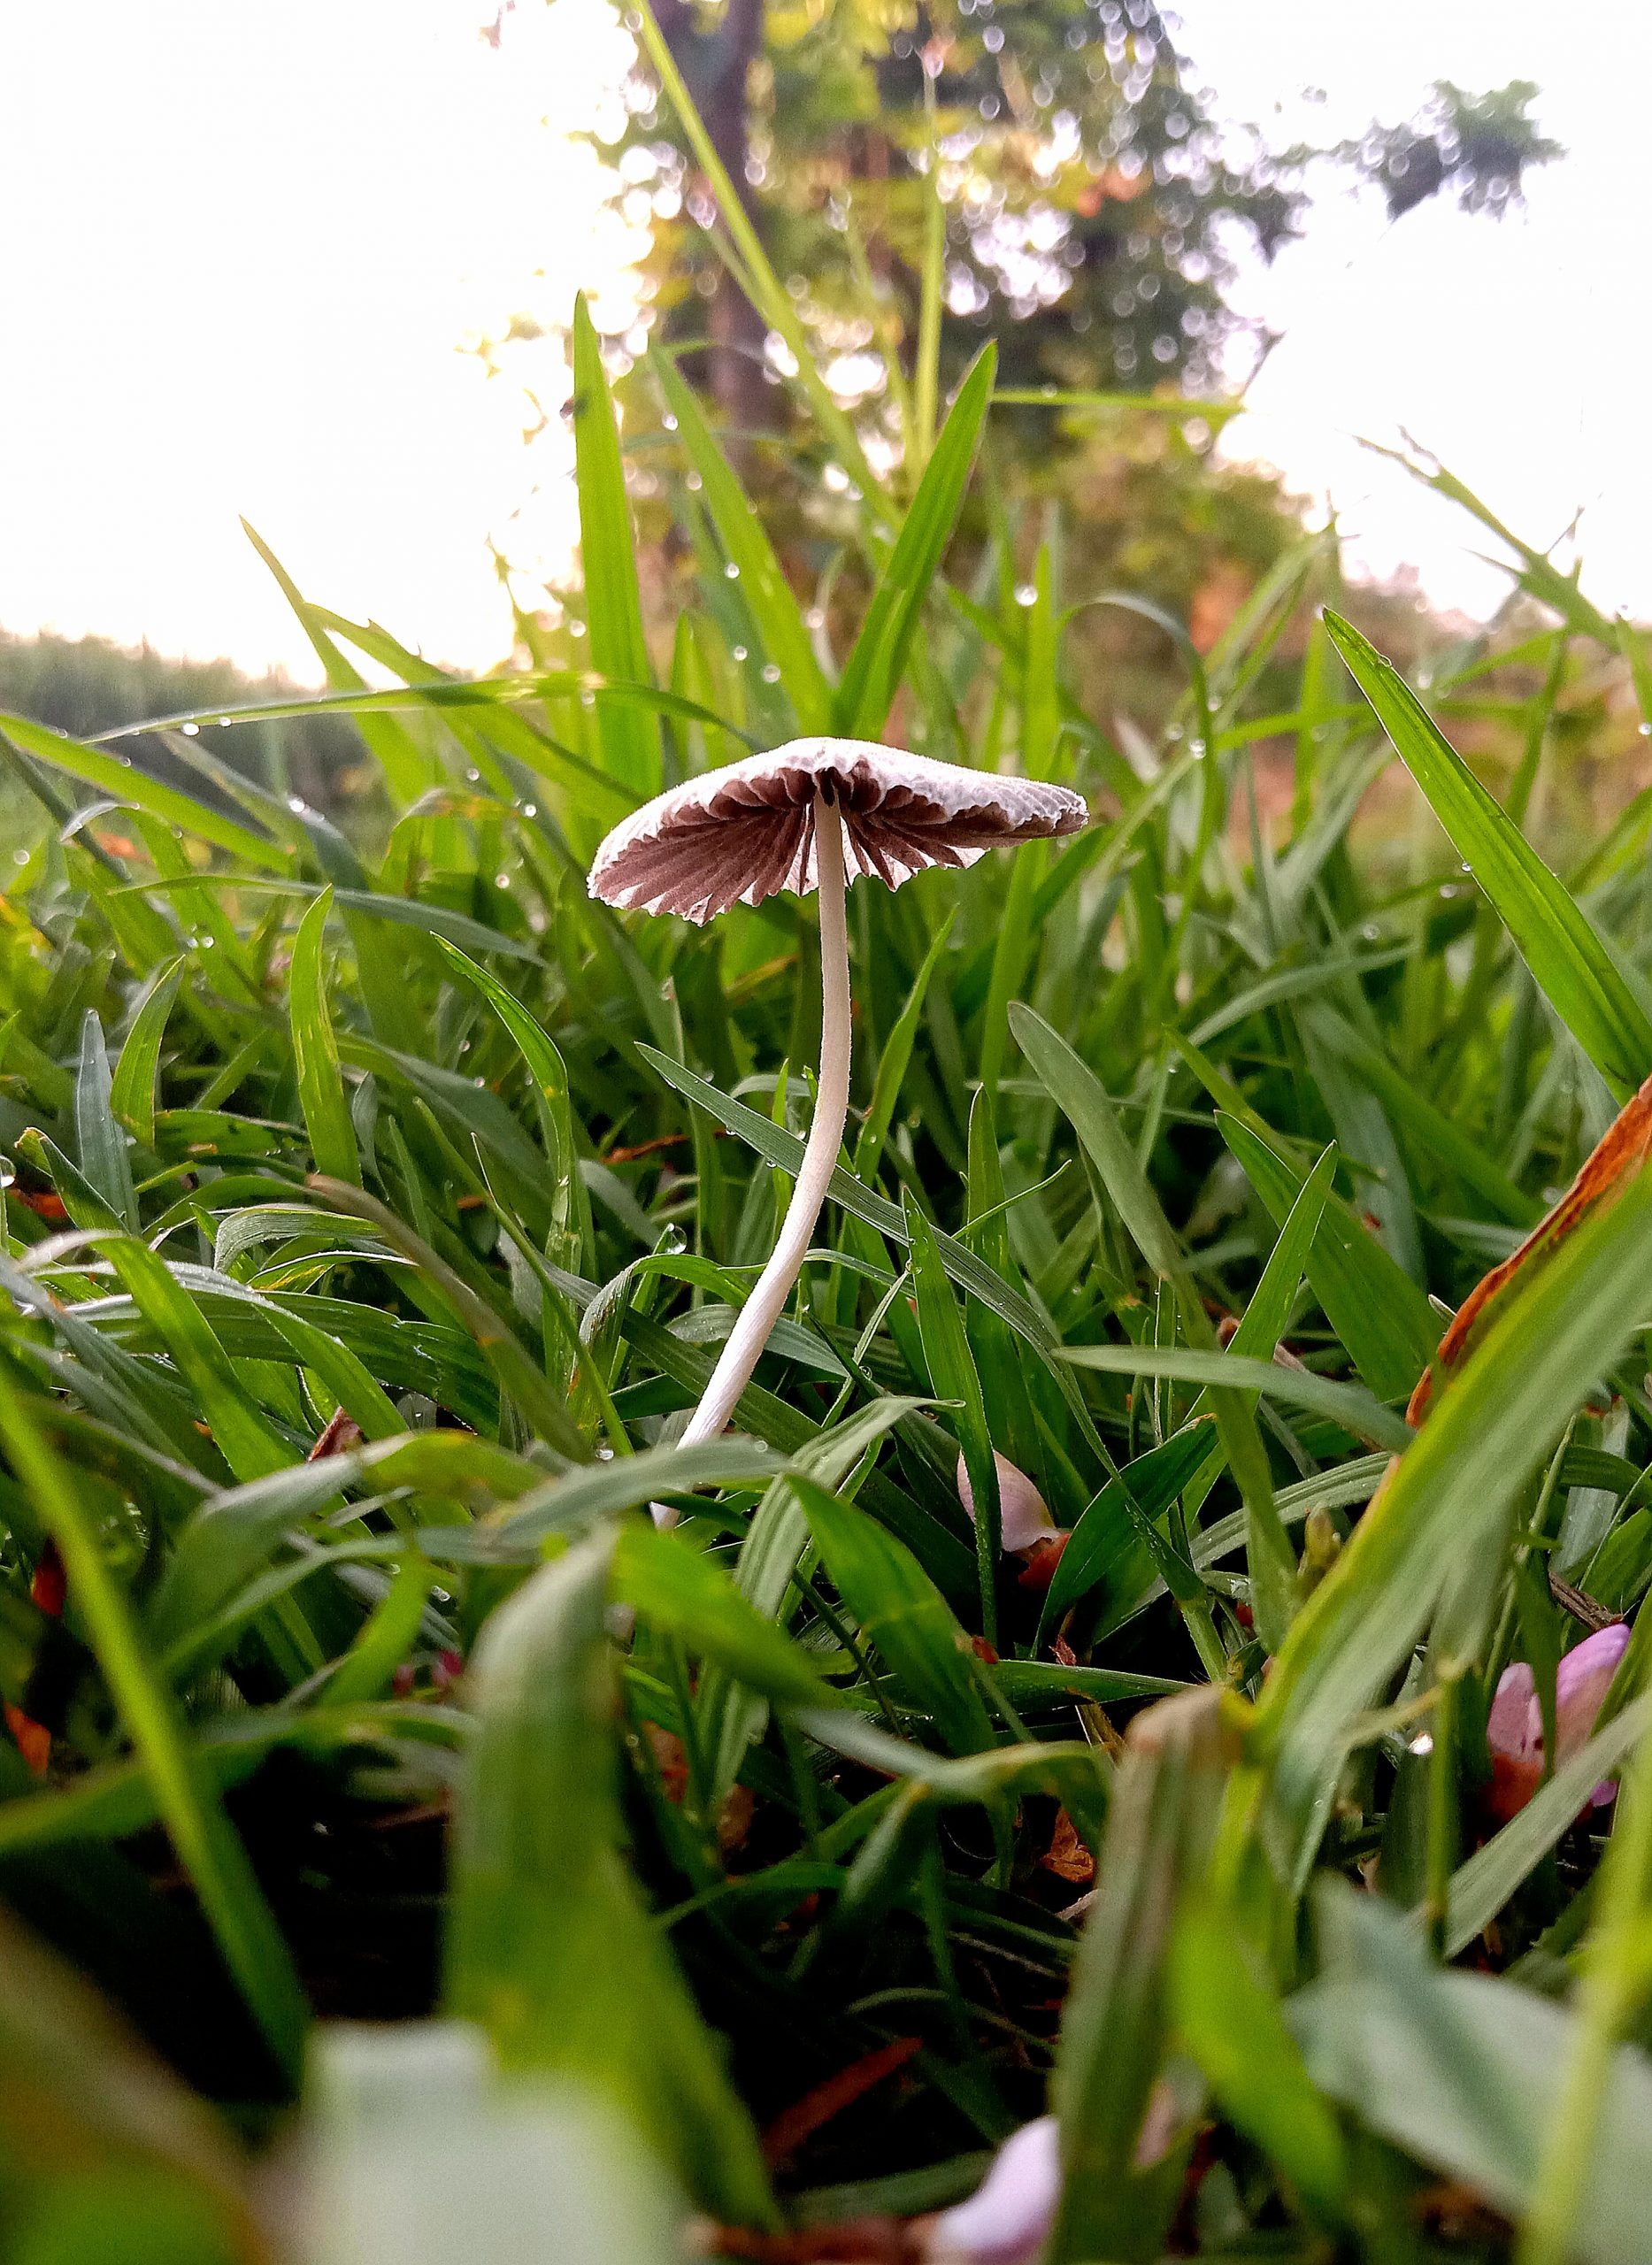 Mushroom growing in grass